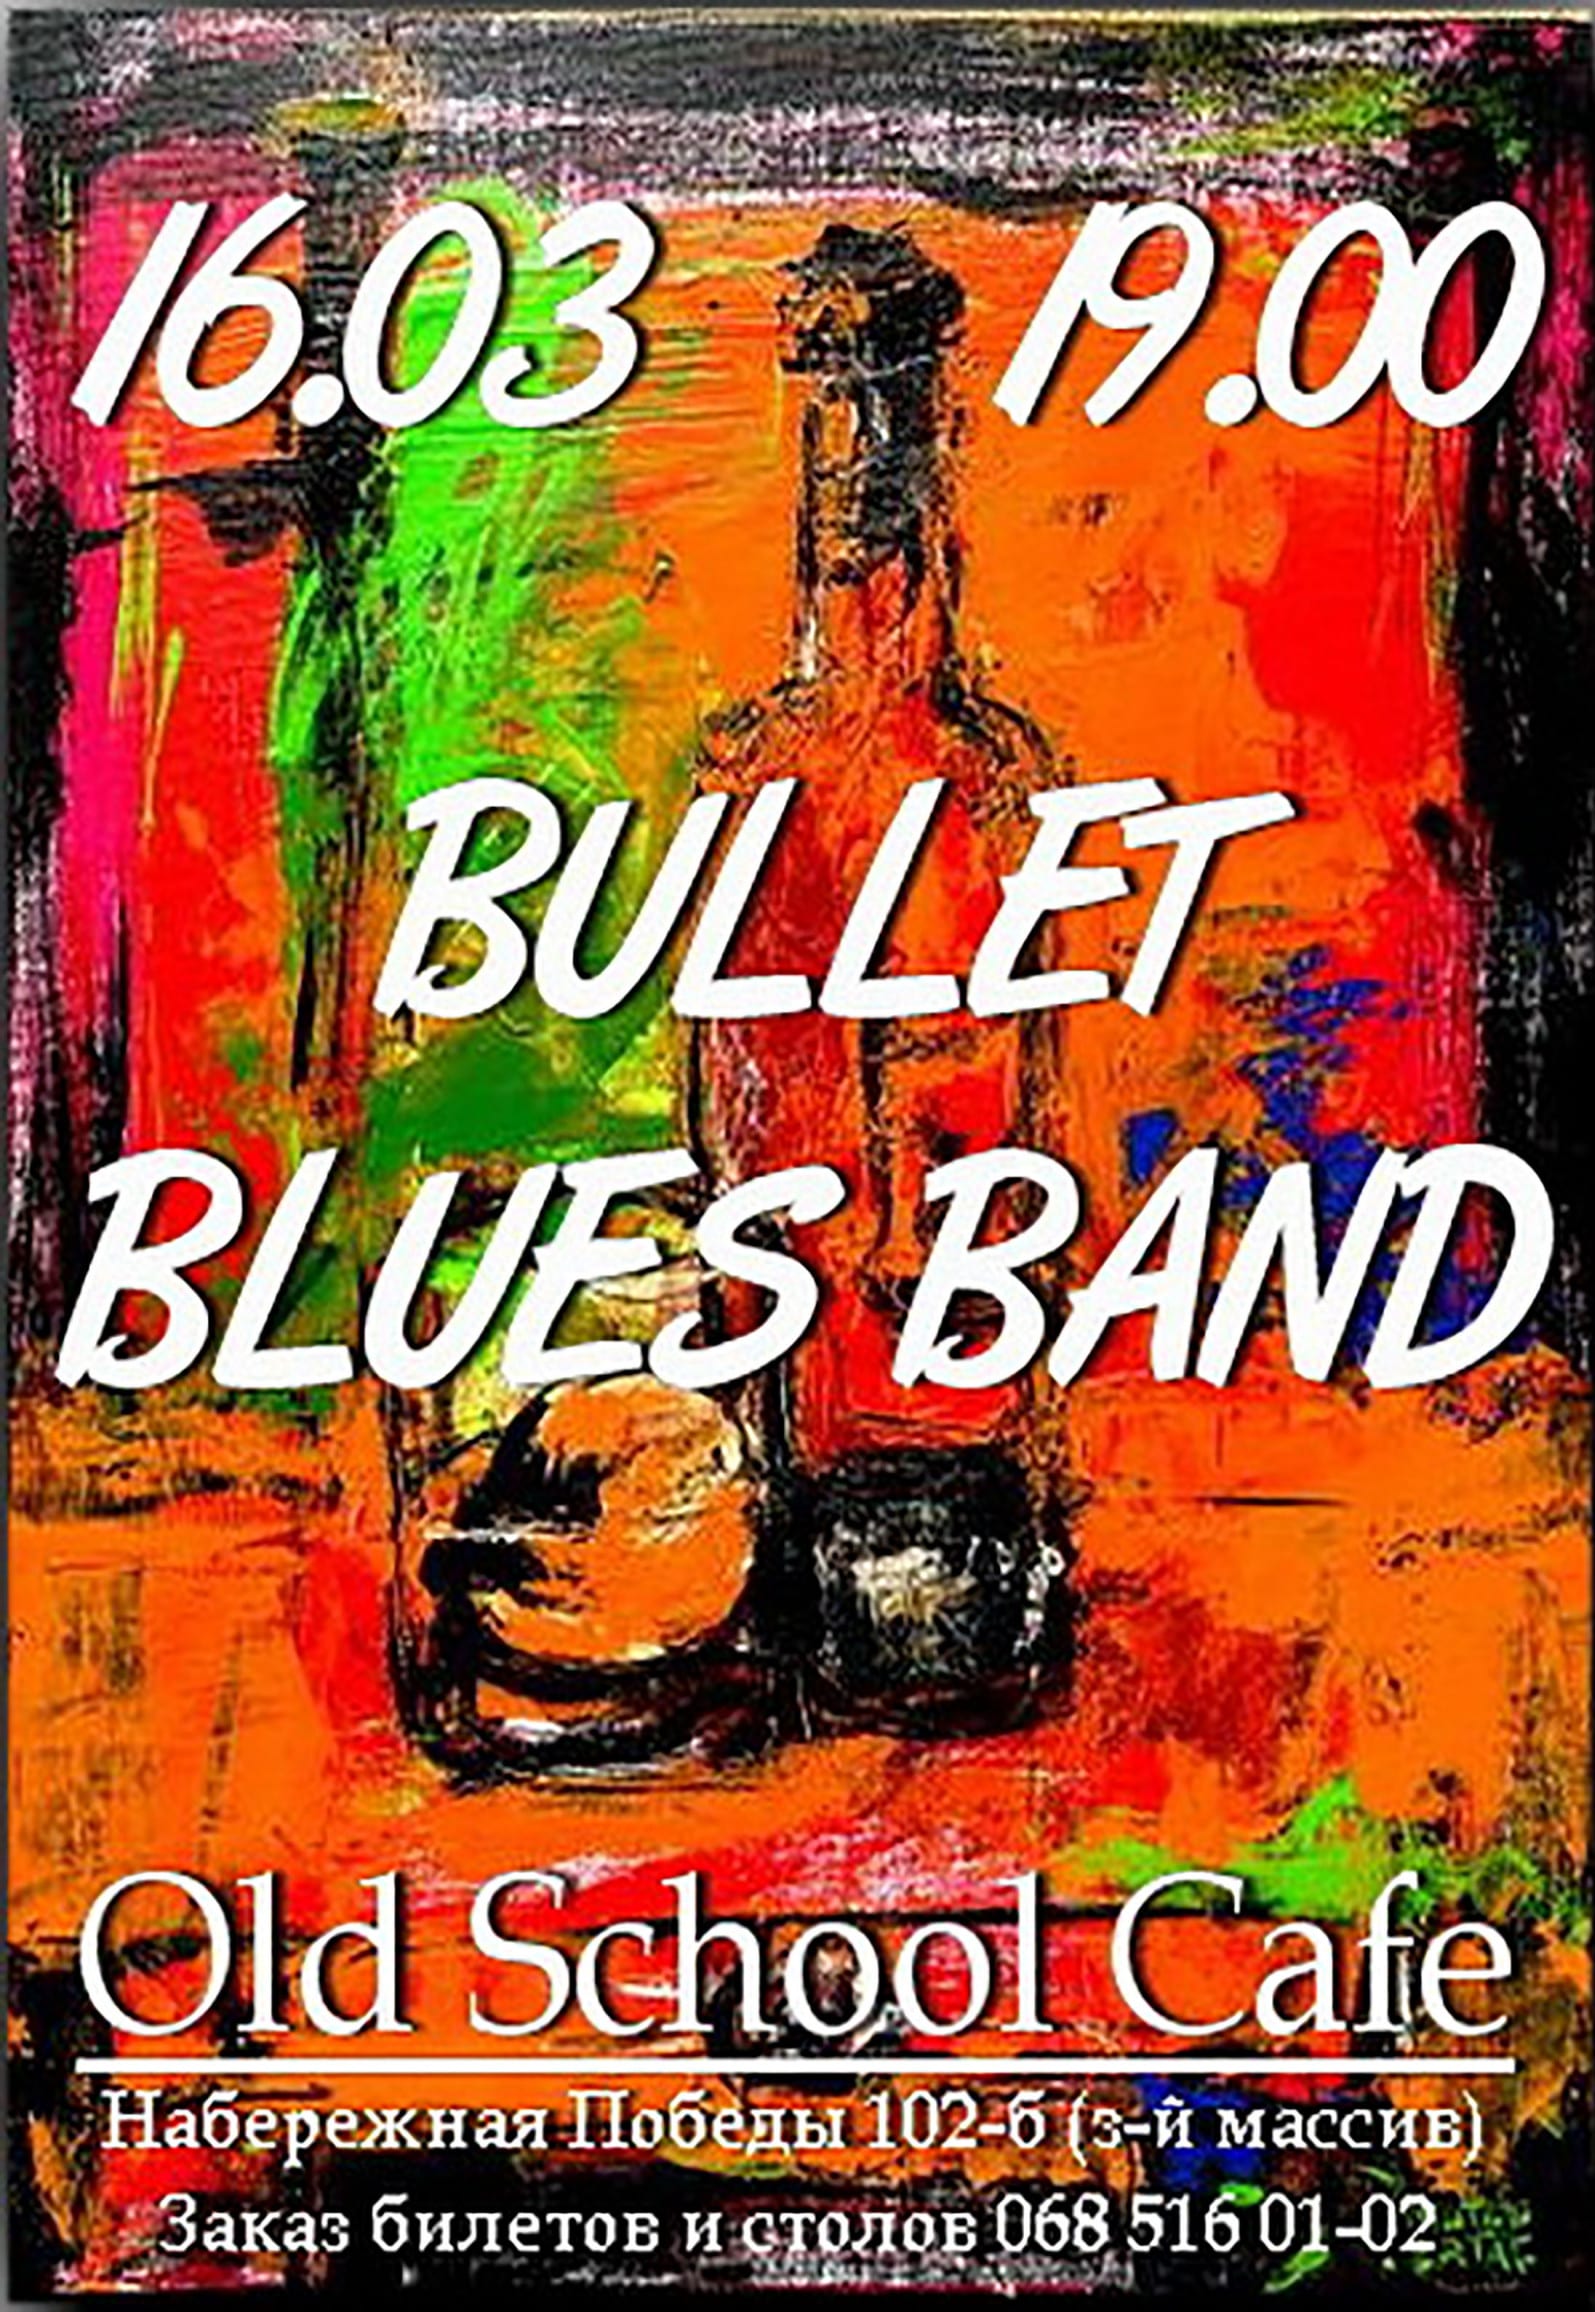 Вечер блюза с Bullet Blues Band Днепр, купить билеты. Афиша Днепра